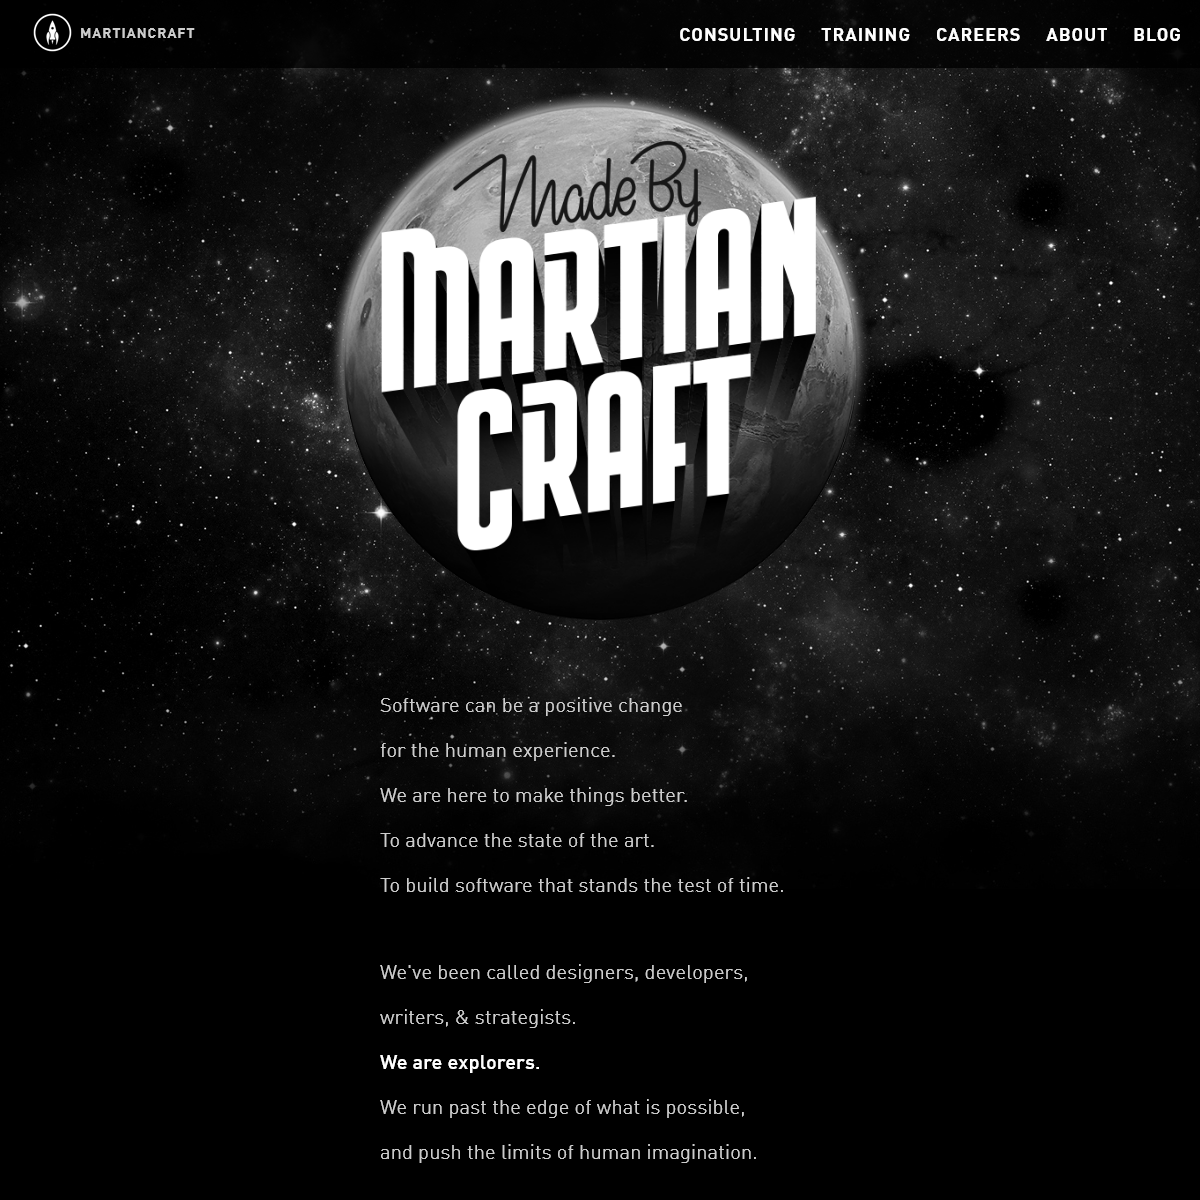 A complete backup of martiancraft.com